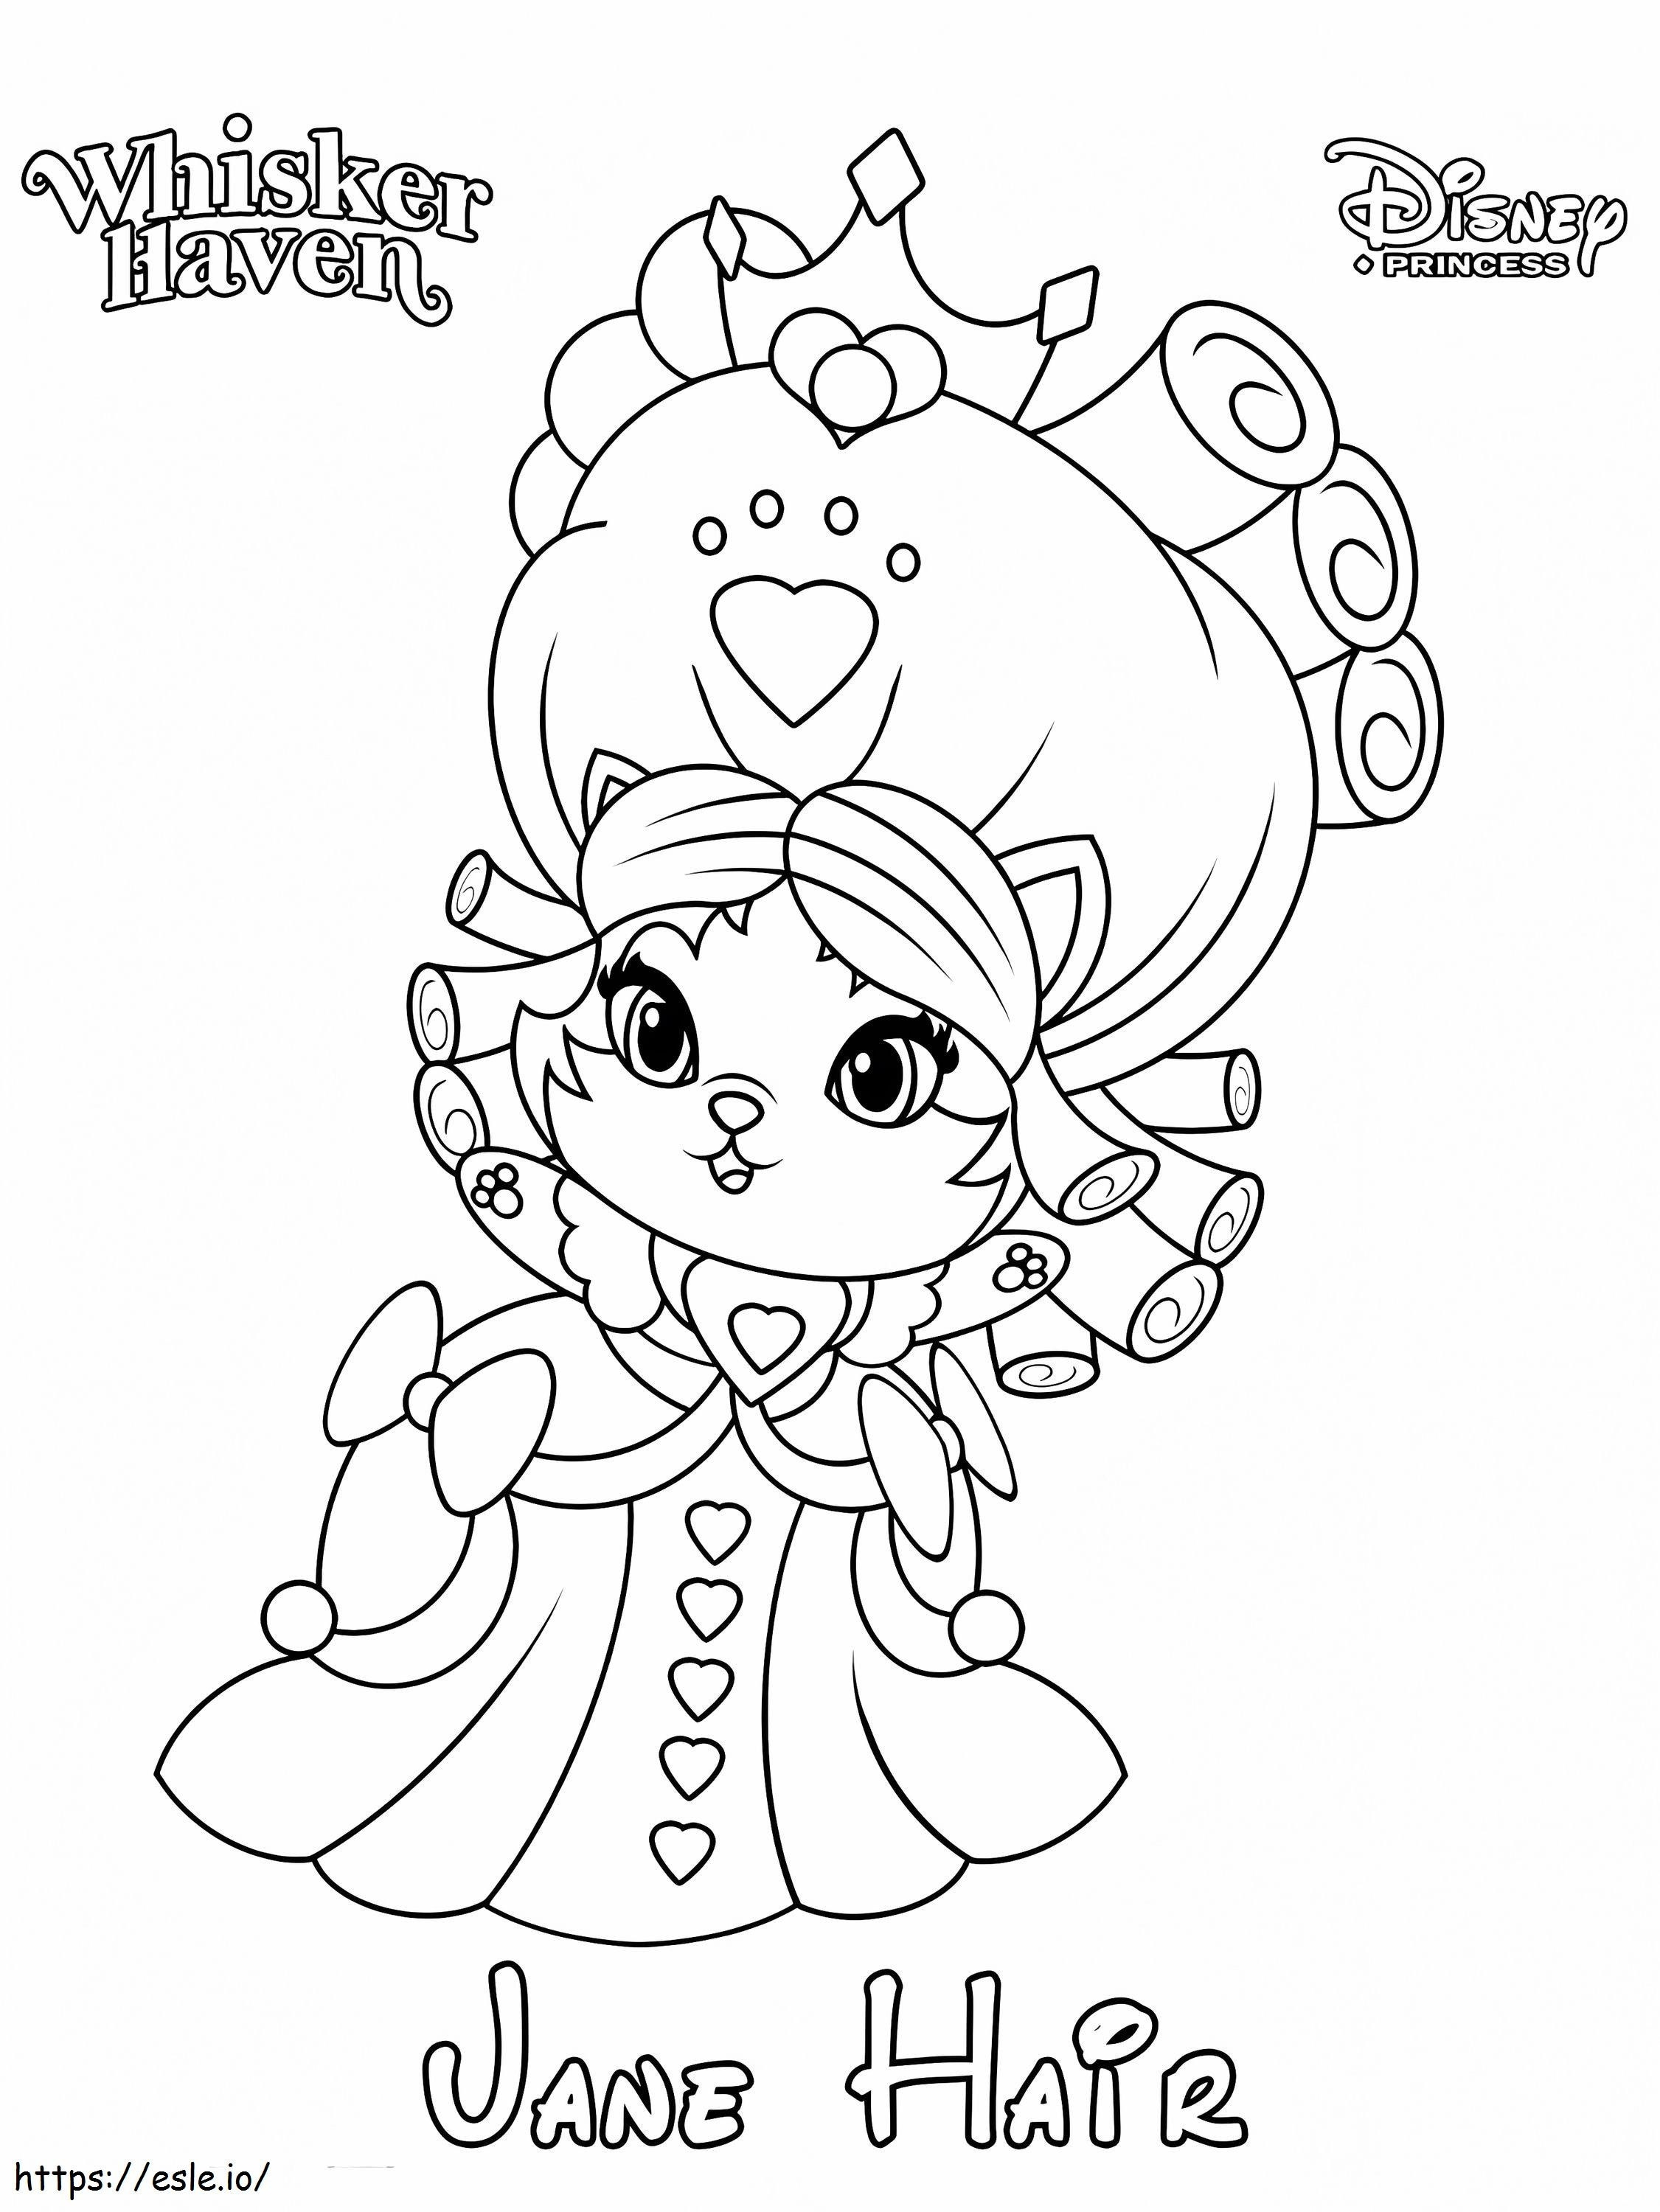 1586853676 Whisker Haven Jane Hair Princess Palace Pet coloring page